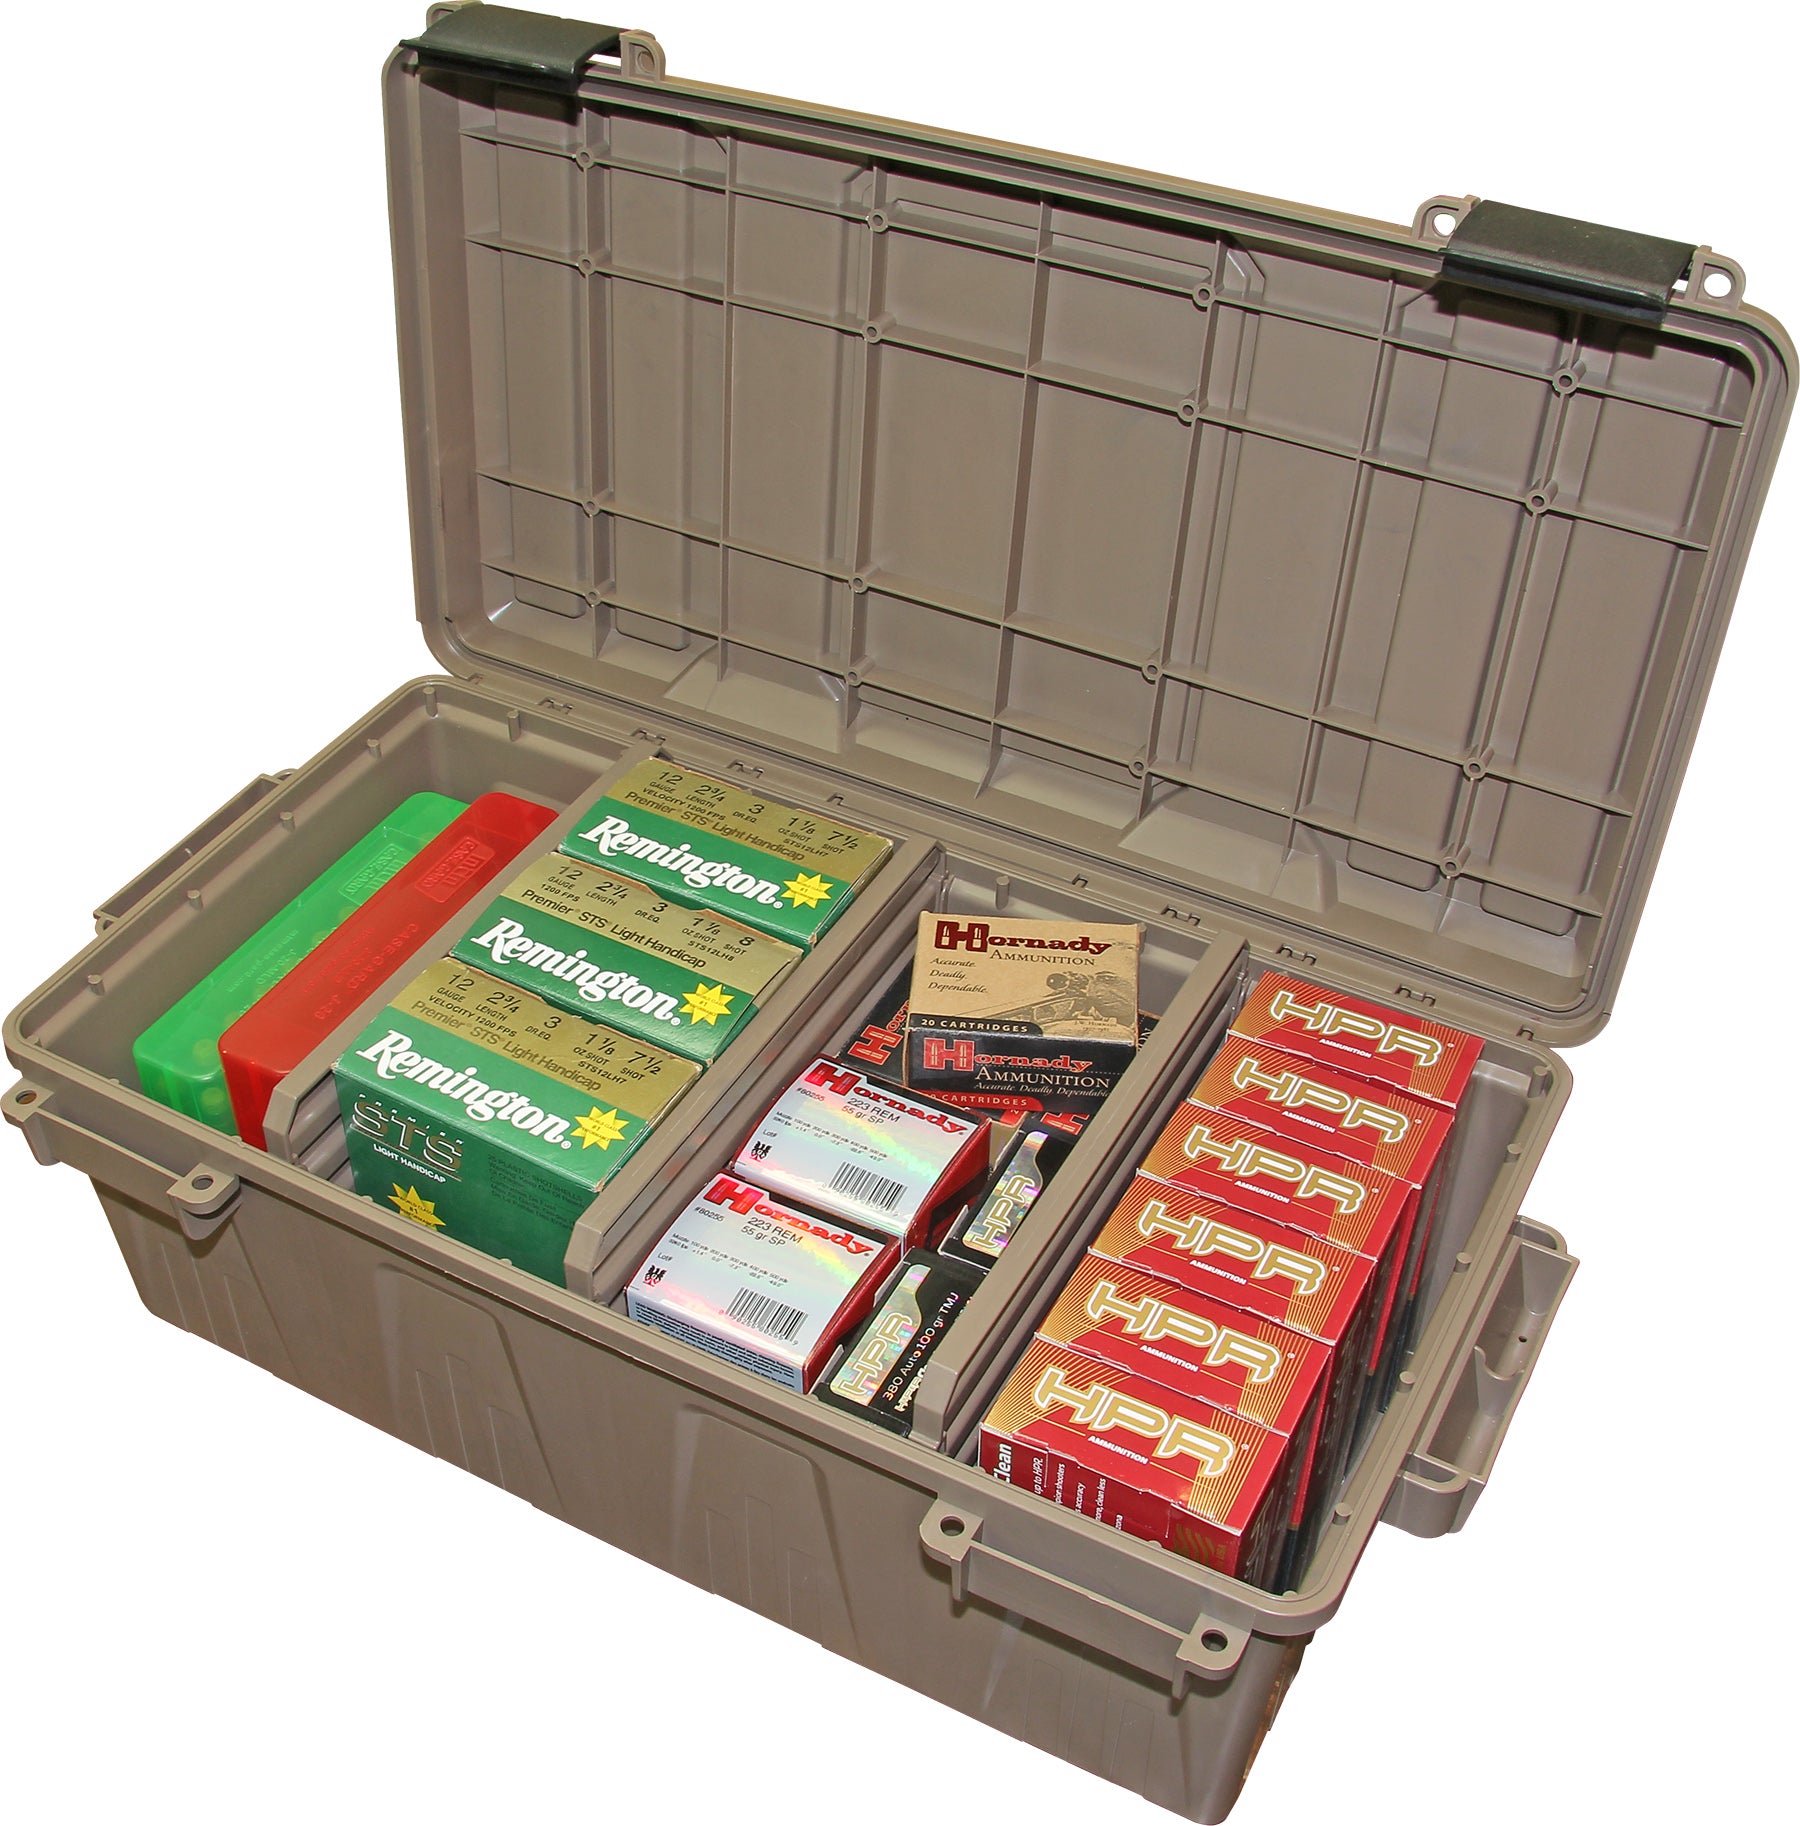 Ammo box storage solution